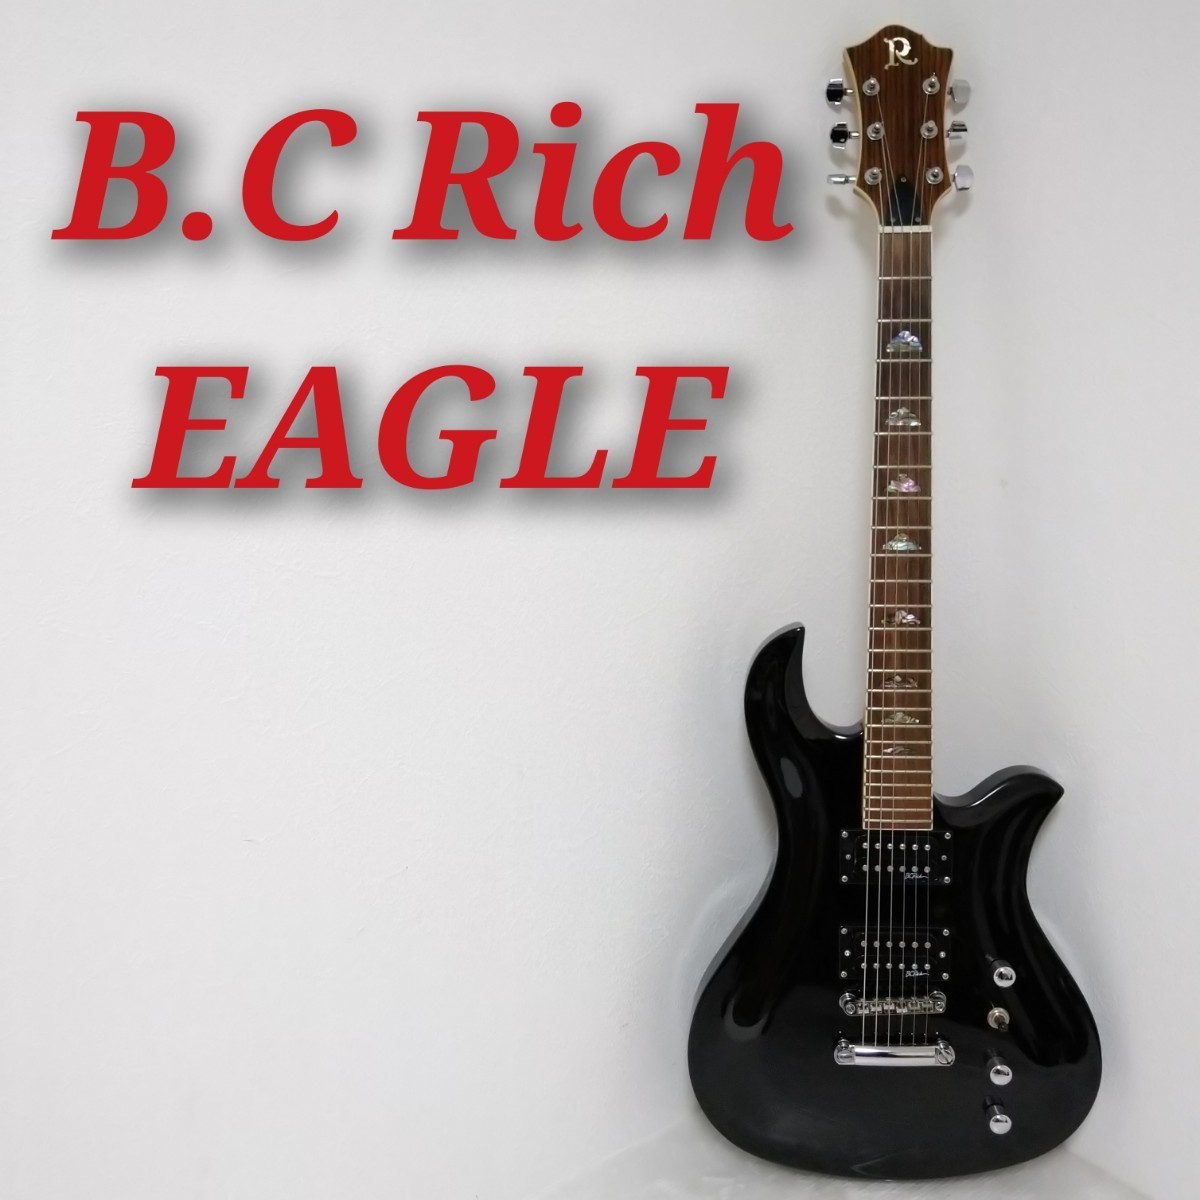 b.c rich eagleの値段と価格推移は？｜2件の売買データからb.c rich